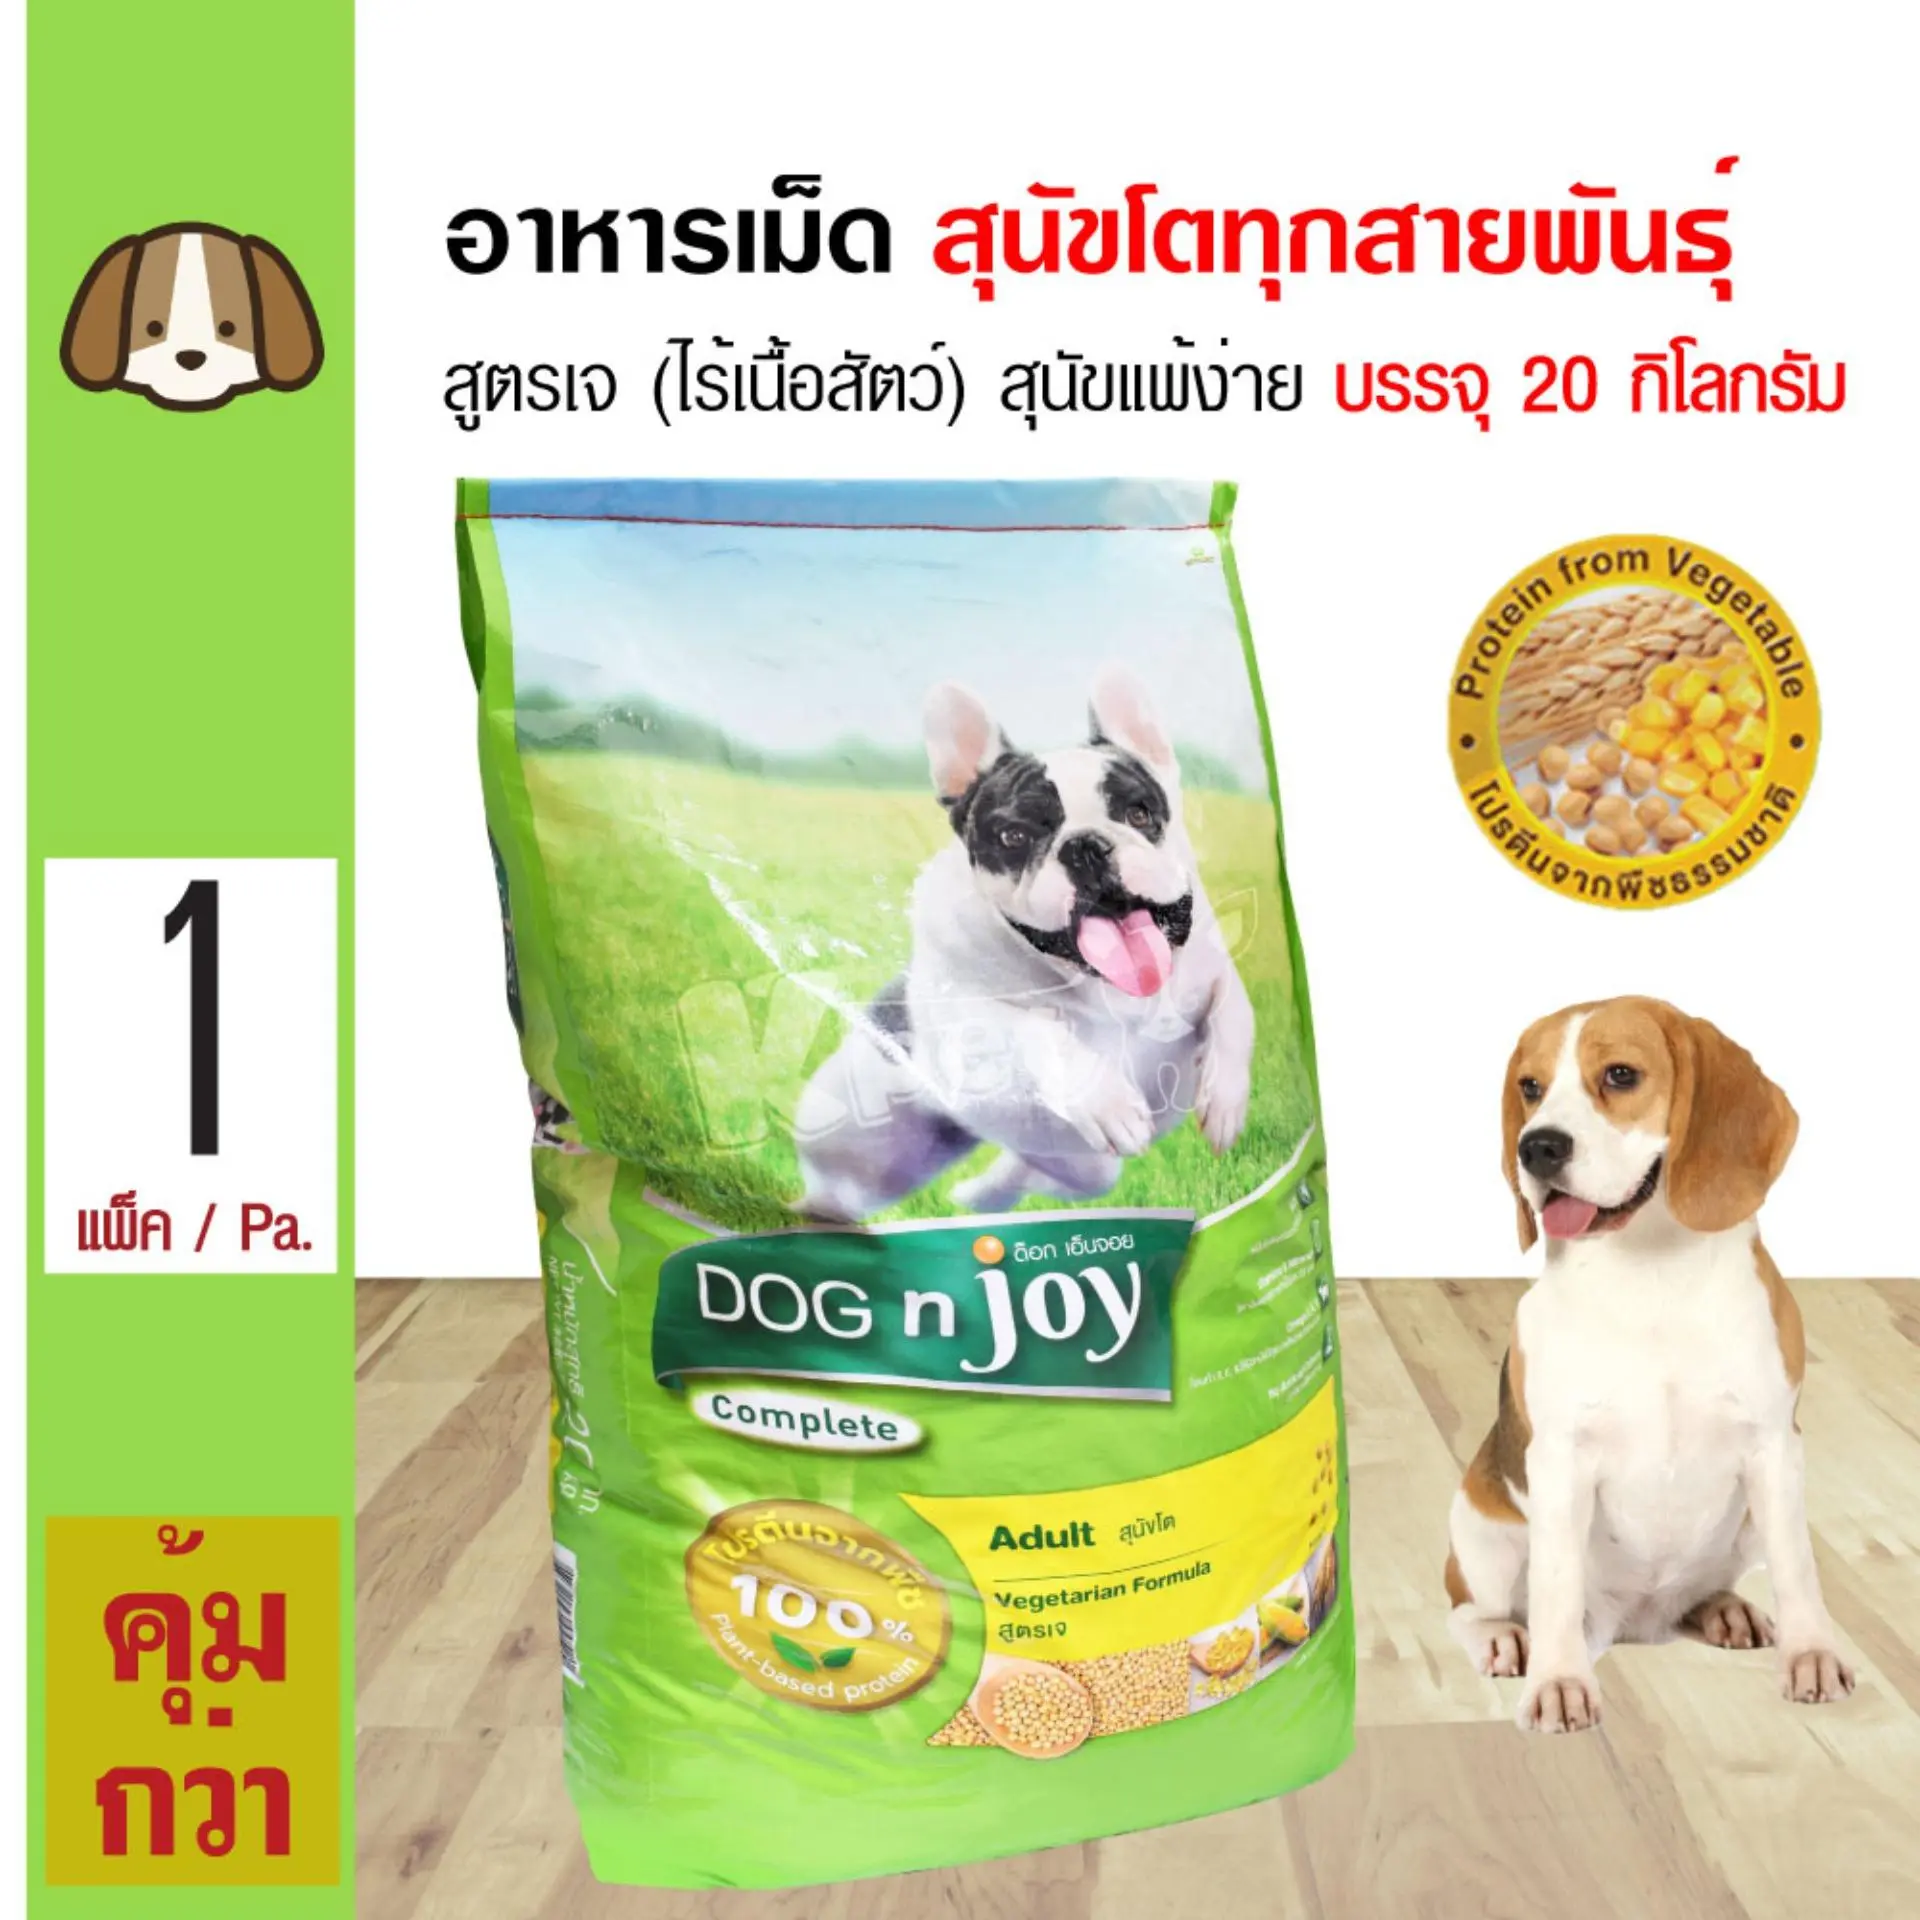 Dog 'n Joy Vegetarian 20 Kg. อาหารสุนัข สูตรเจ ไม่มีเนื้อสัตว์ ผิวแพ้ง่าย สำหรับสุนัขโตทุกสายพันธุ์ (20 กิโลกรัม/ กระสอบ)